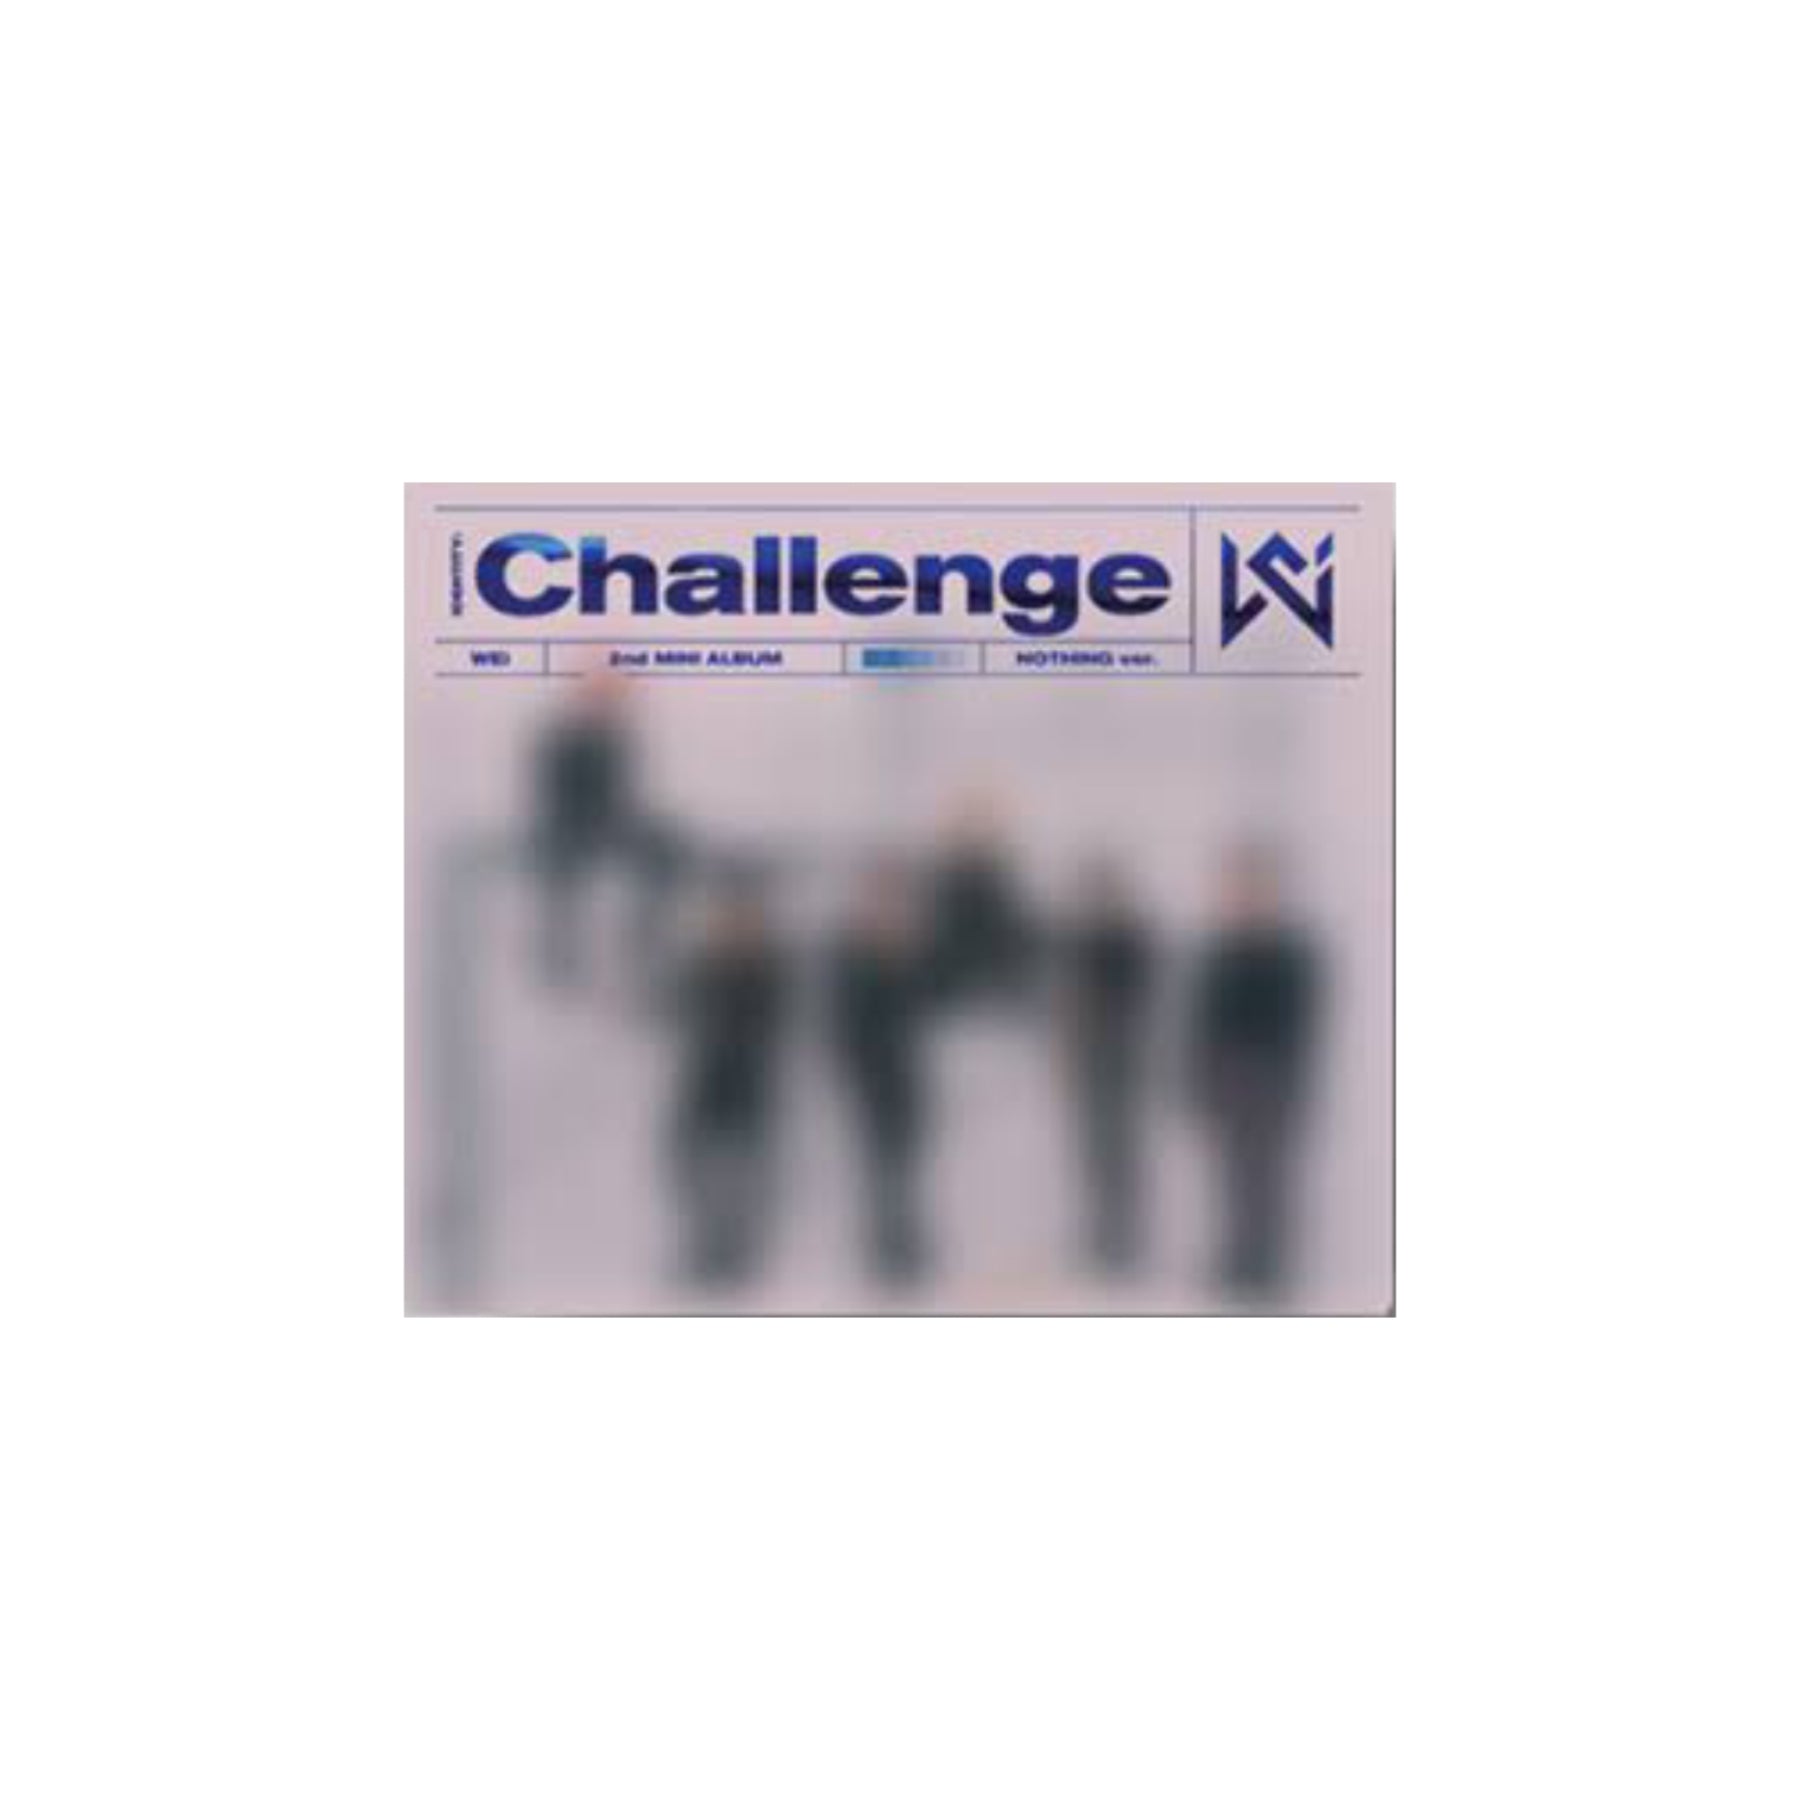 Wei - Identity: Challenge (2nd mini album) Nothing Ver.